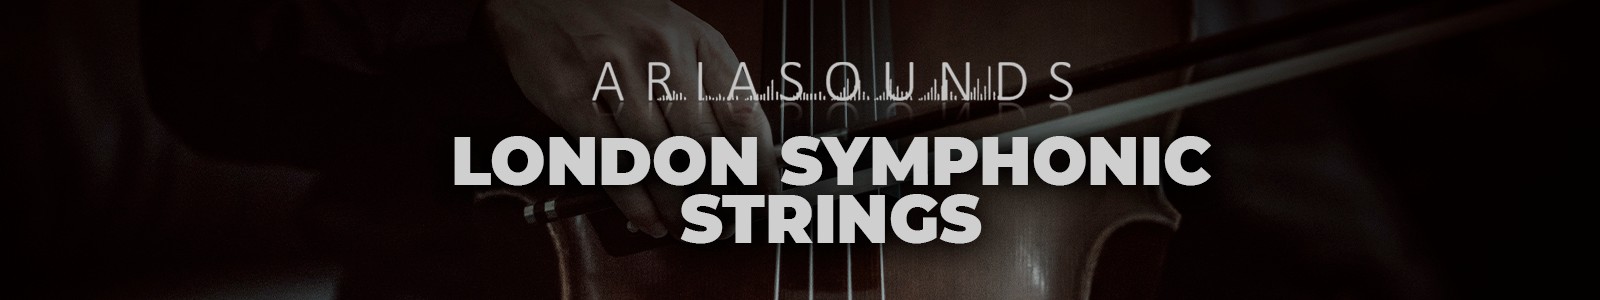 london symphonic strings